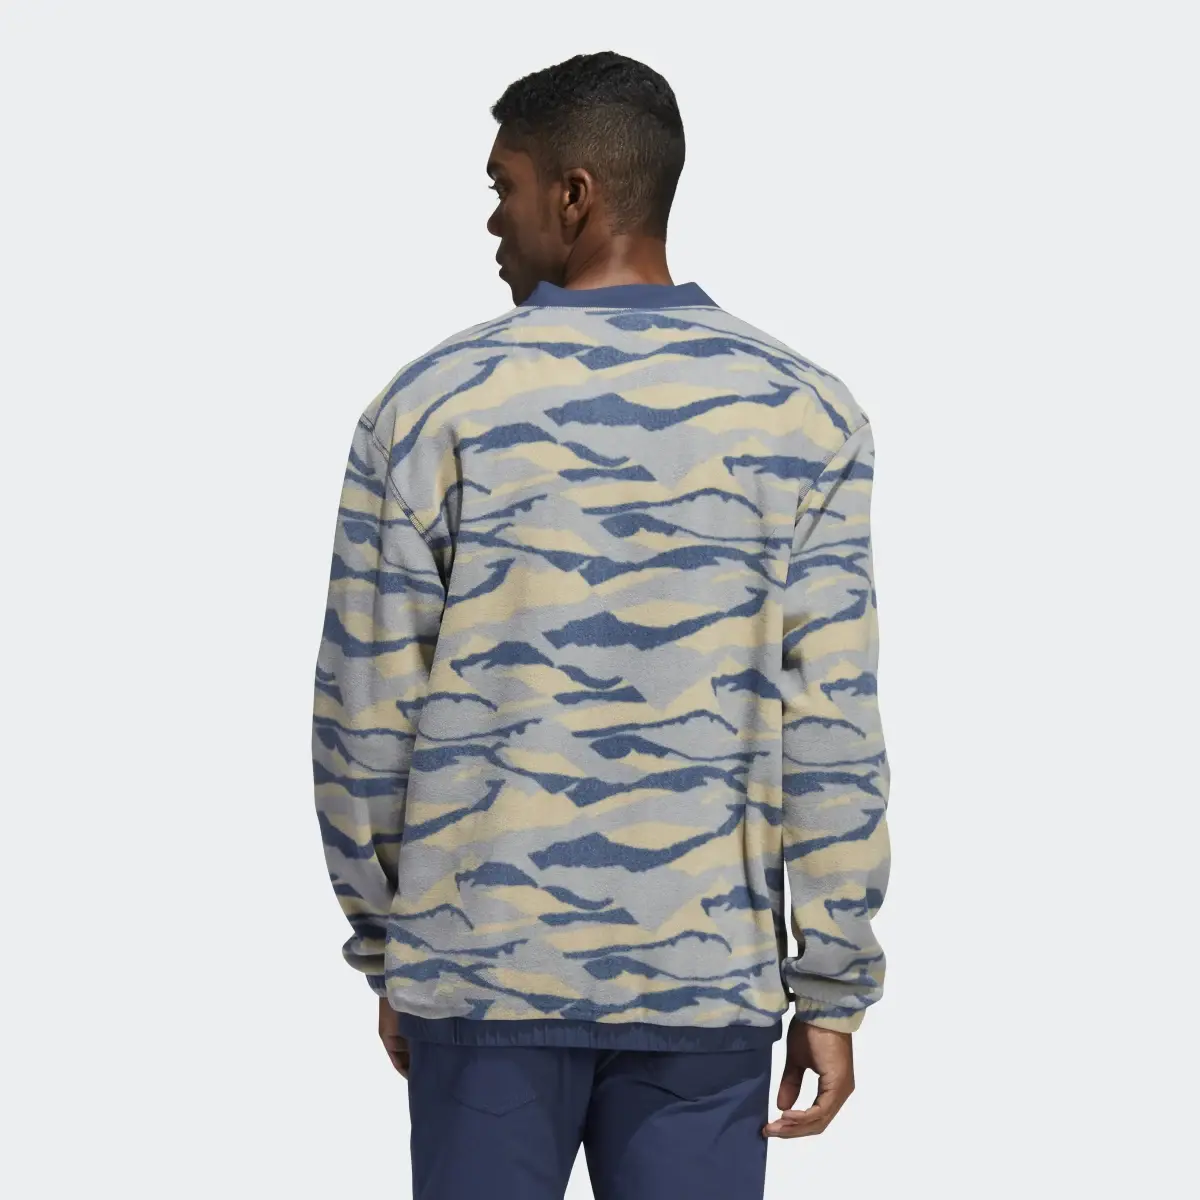 Adidas Texture-Print Crew Sweatshirt. 3